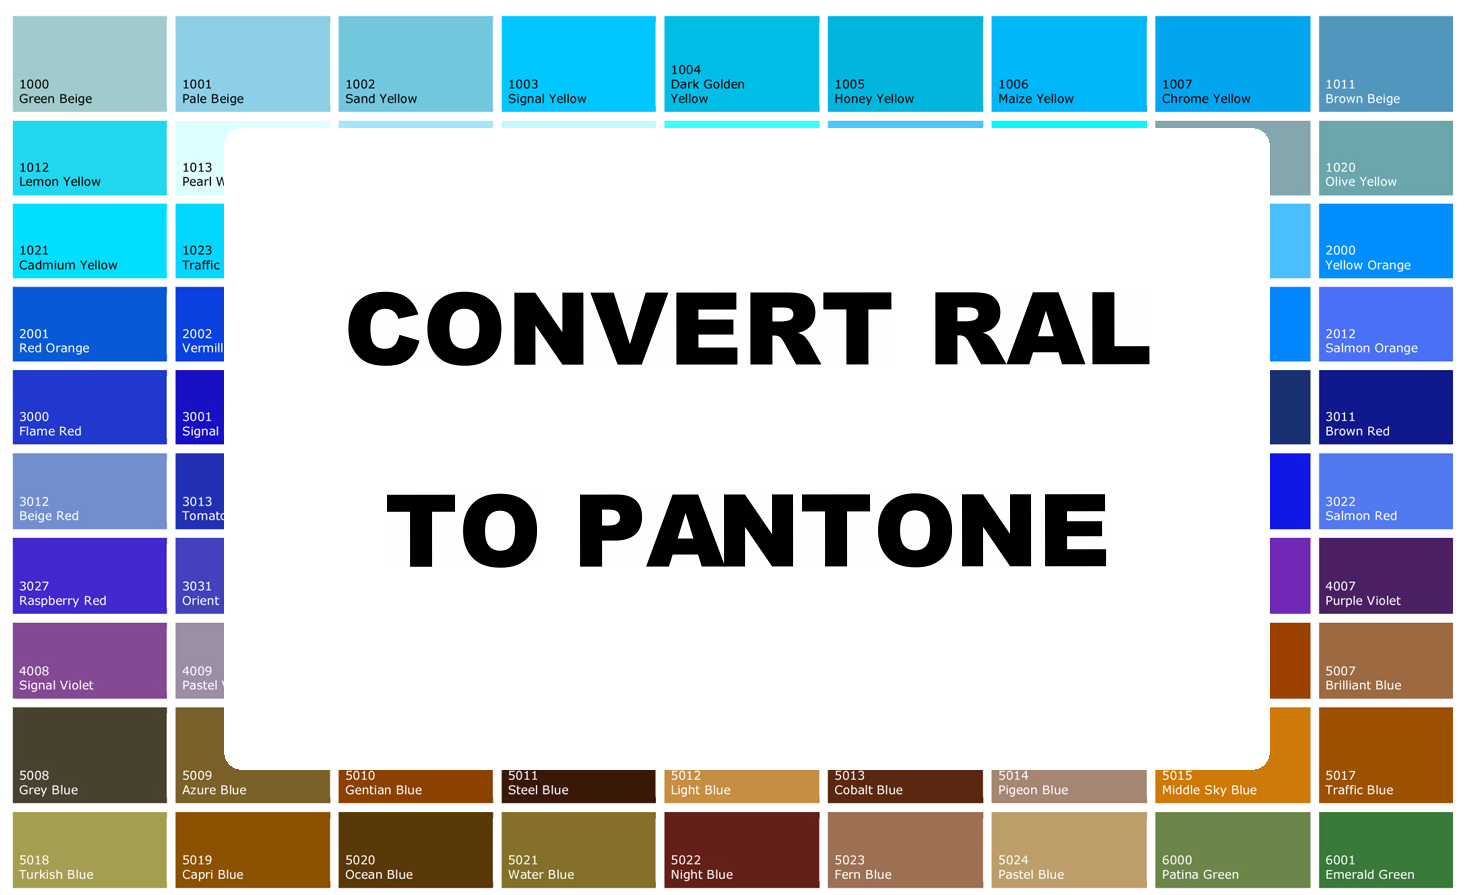 ral-to-pantone-conversion-hpseoseoro